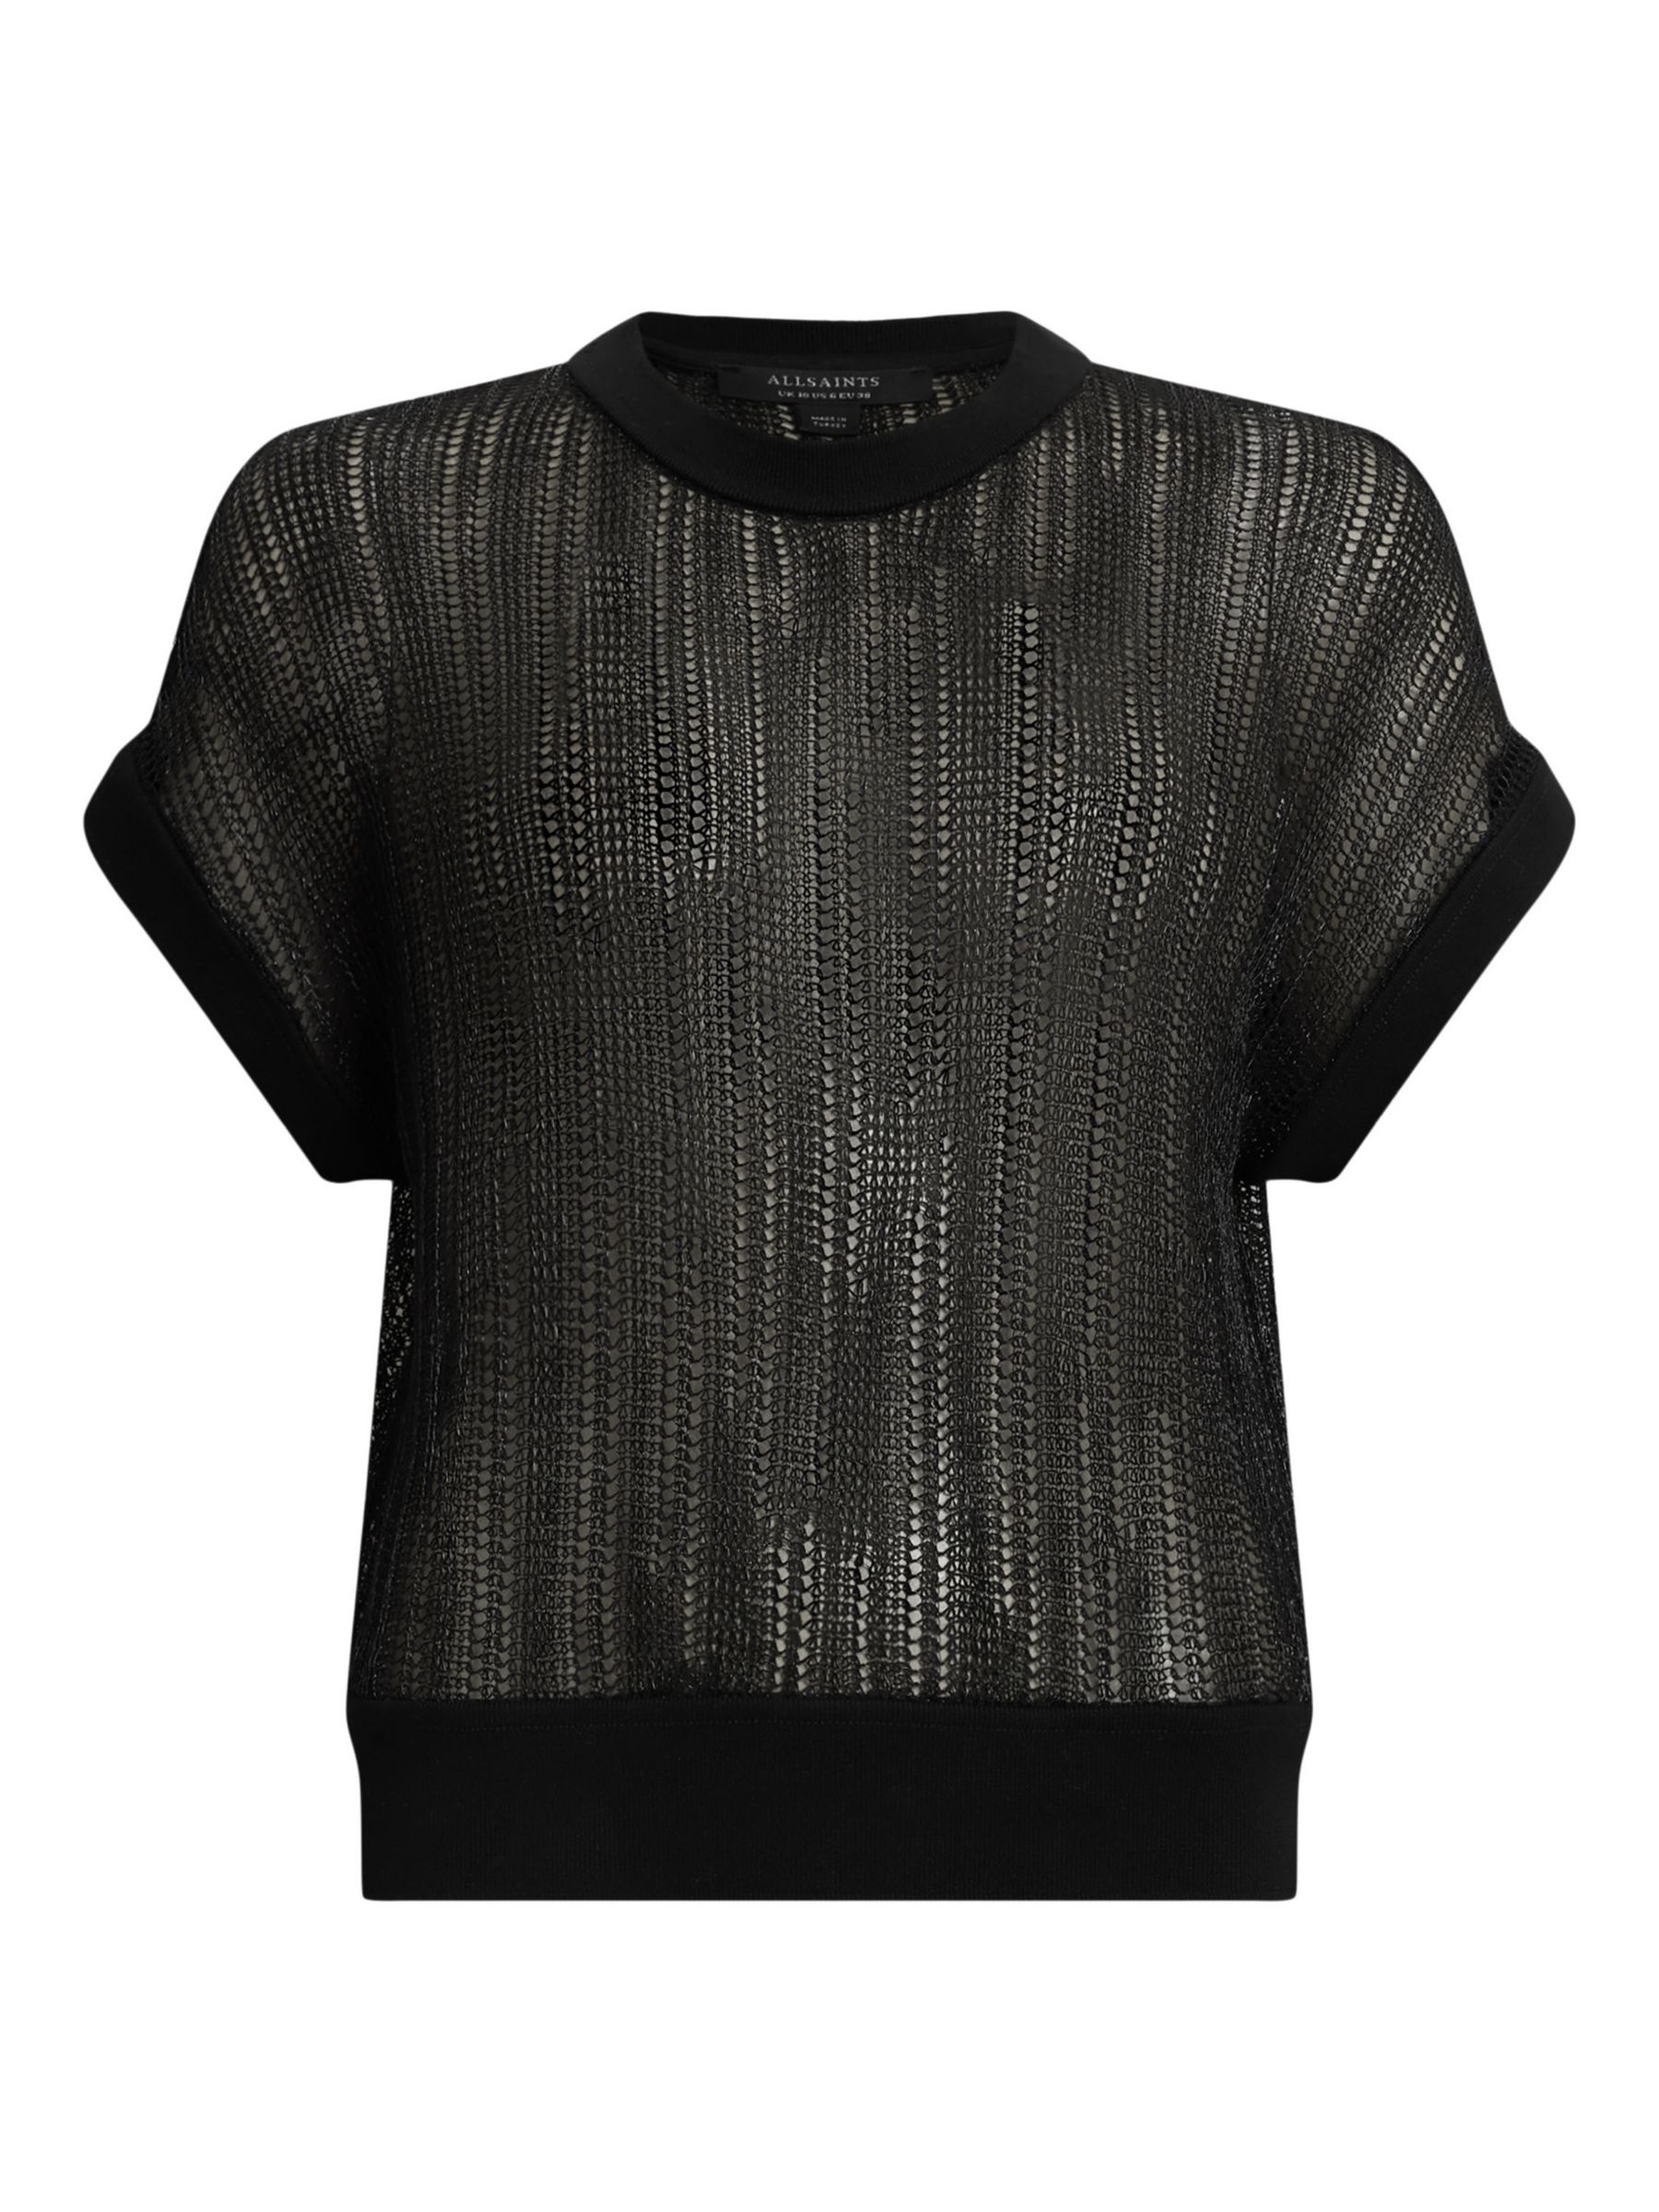 AllSaints Giana Metallic T-Shirt, Black, 10